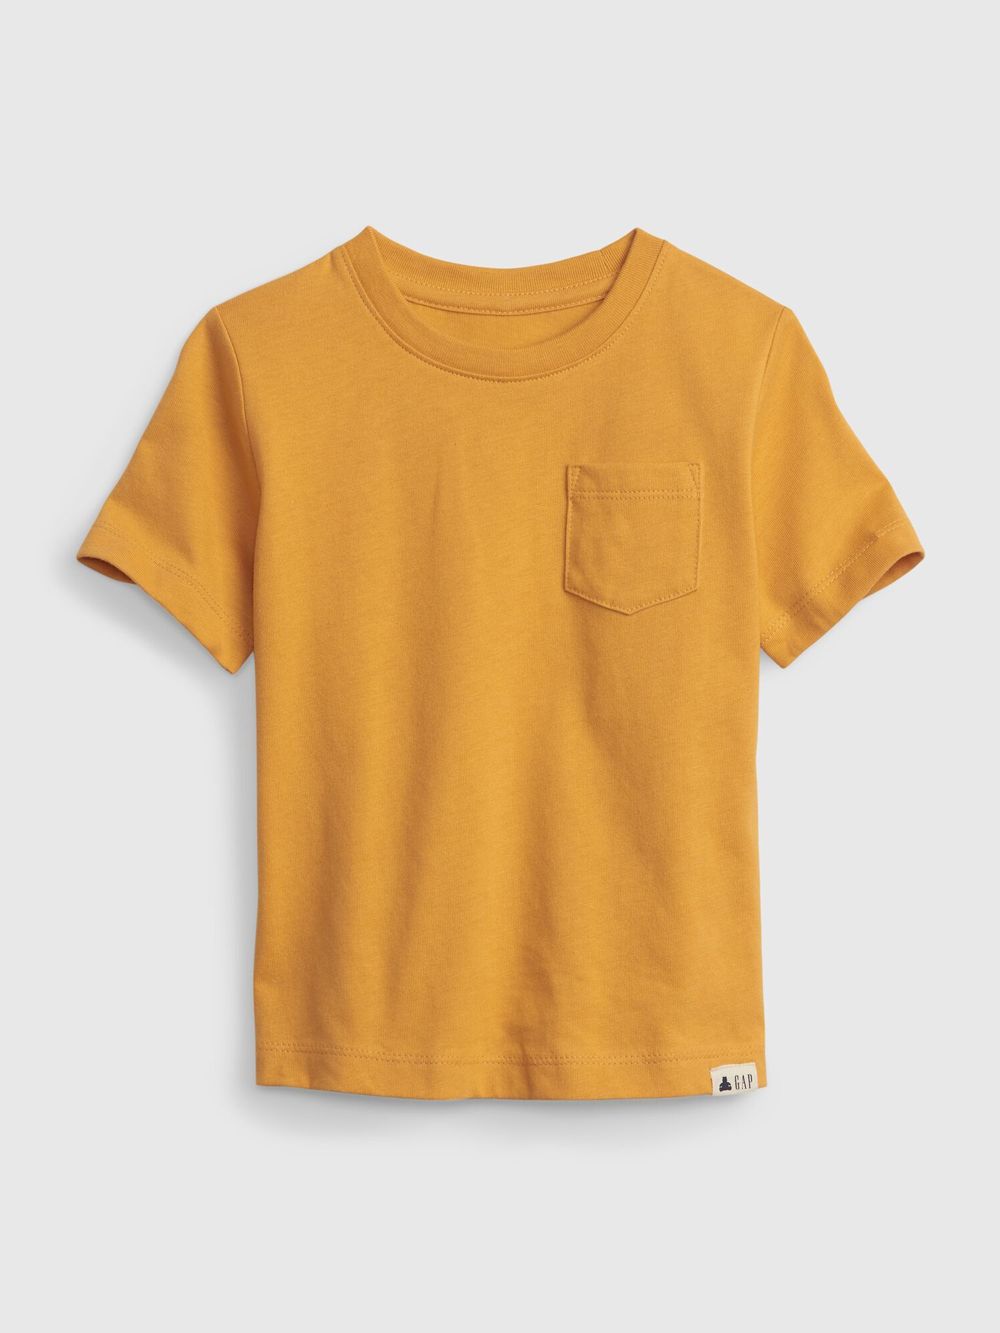 Toddler 100% Organic Cotton Mix and Match T-Shirt.